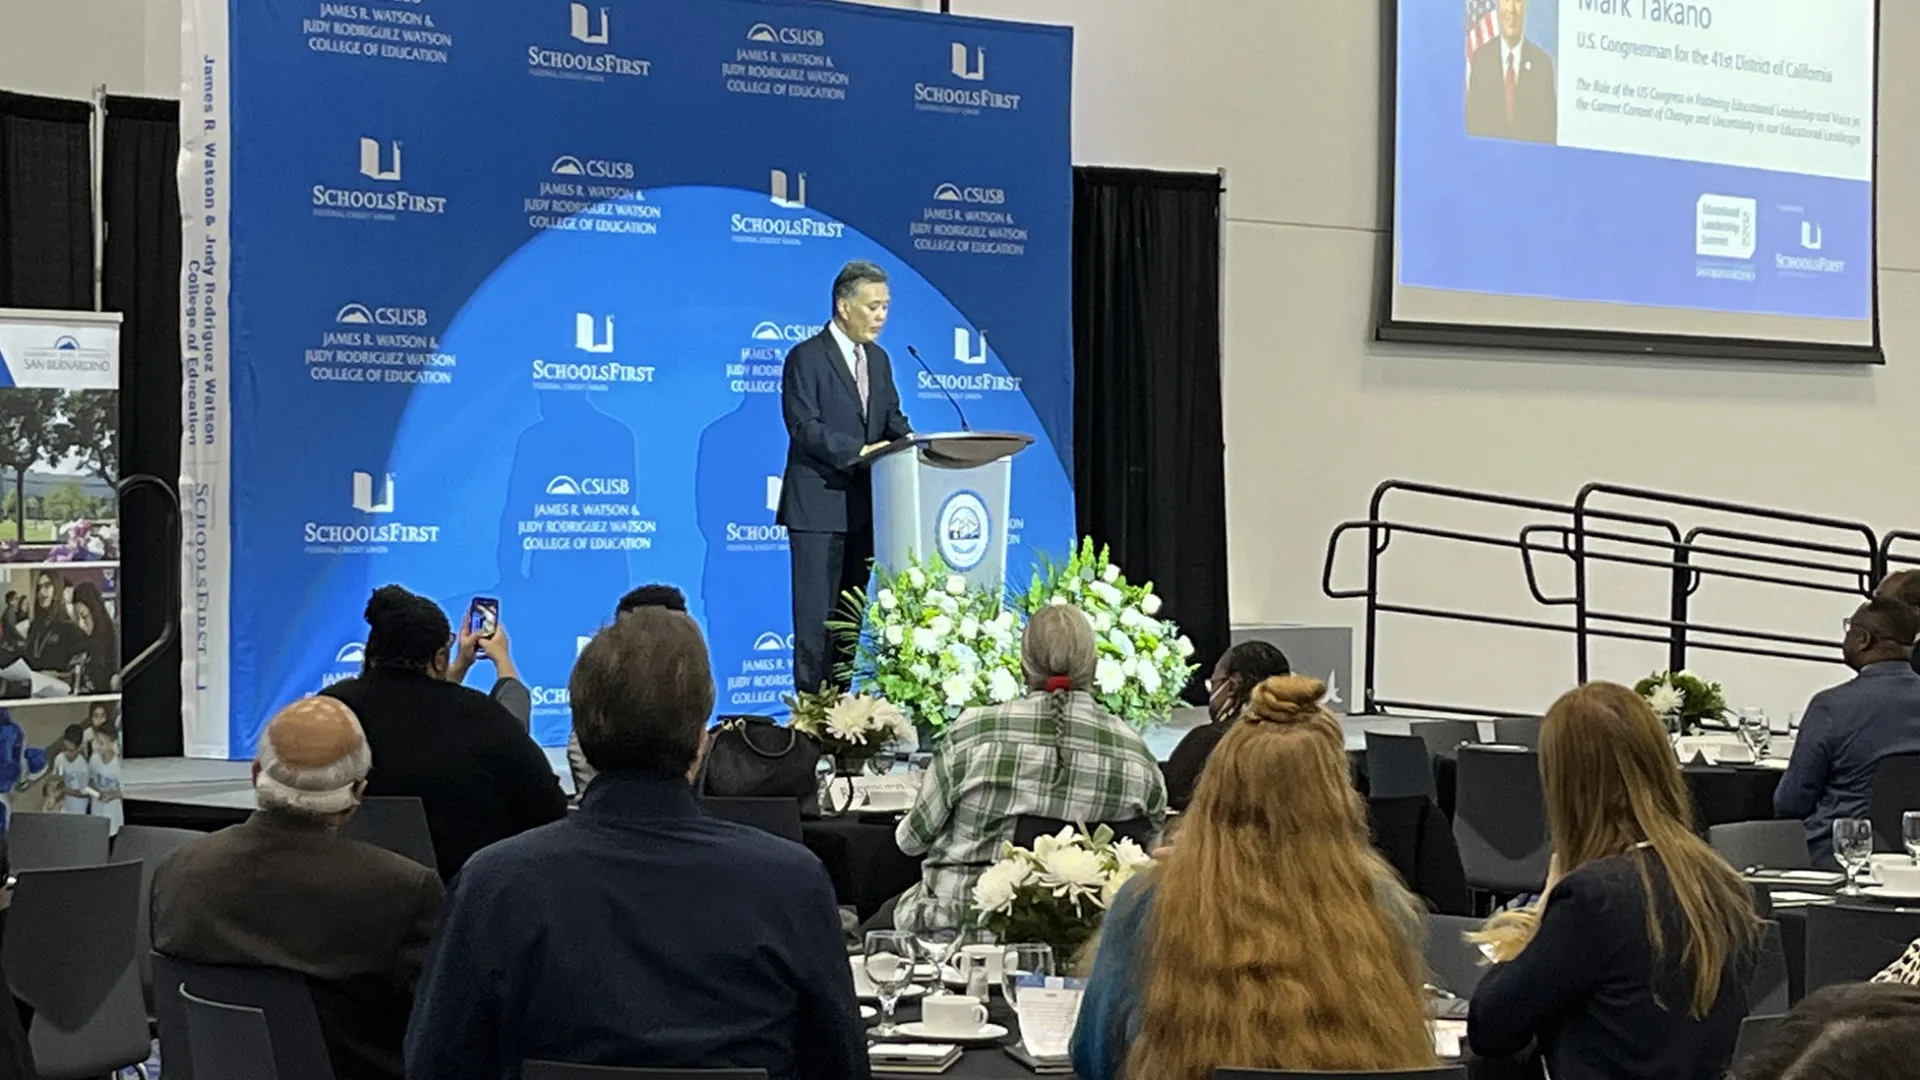 U.S. Rep. Mark Takano, D-Riverside, gave the morning keynote address at the 2022 Educational Leadership Summit at CSUSB on Nov. 2.